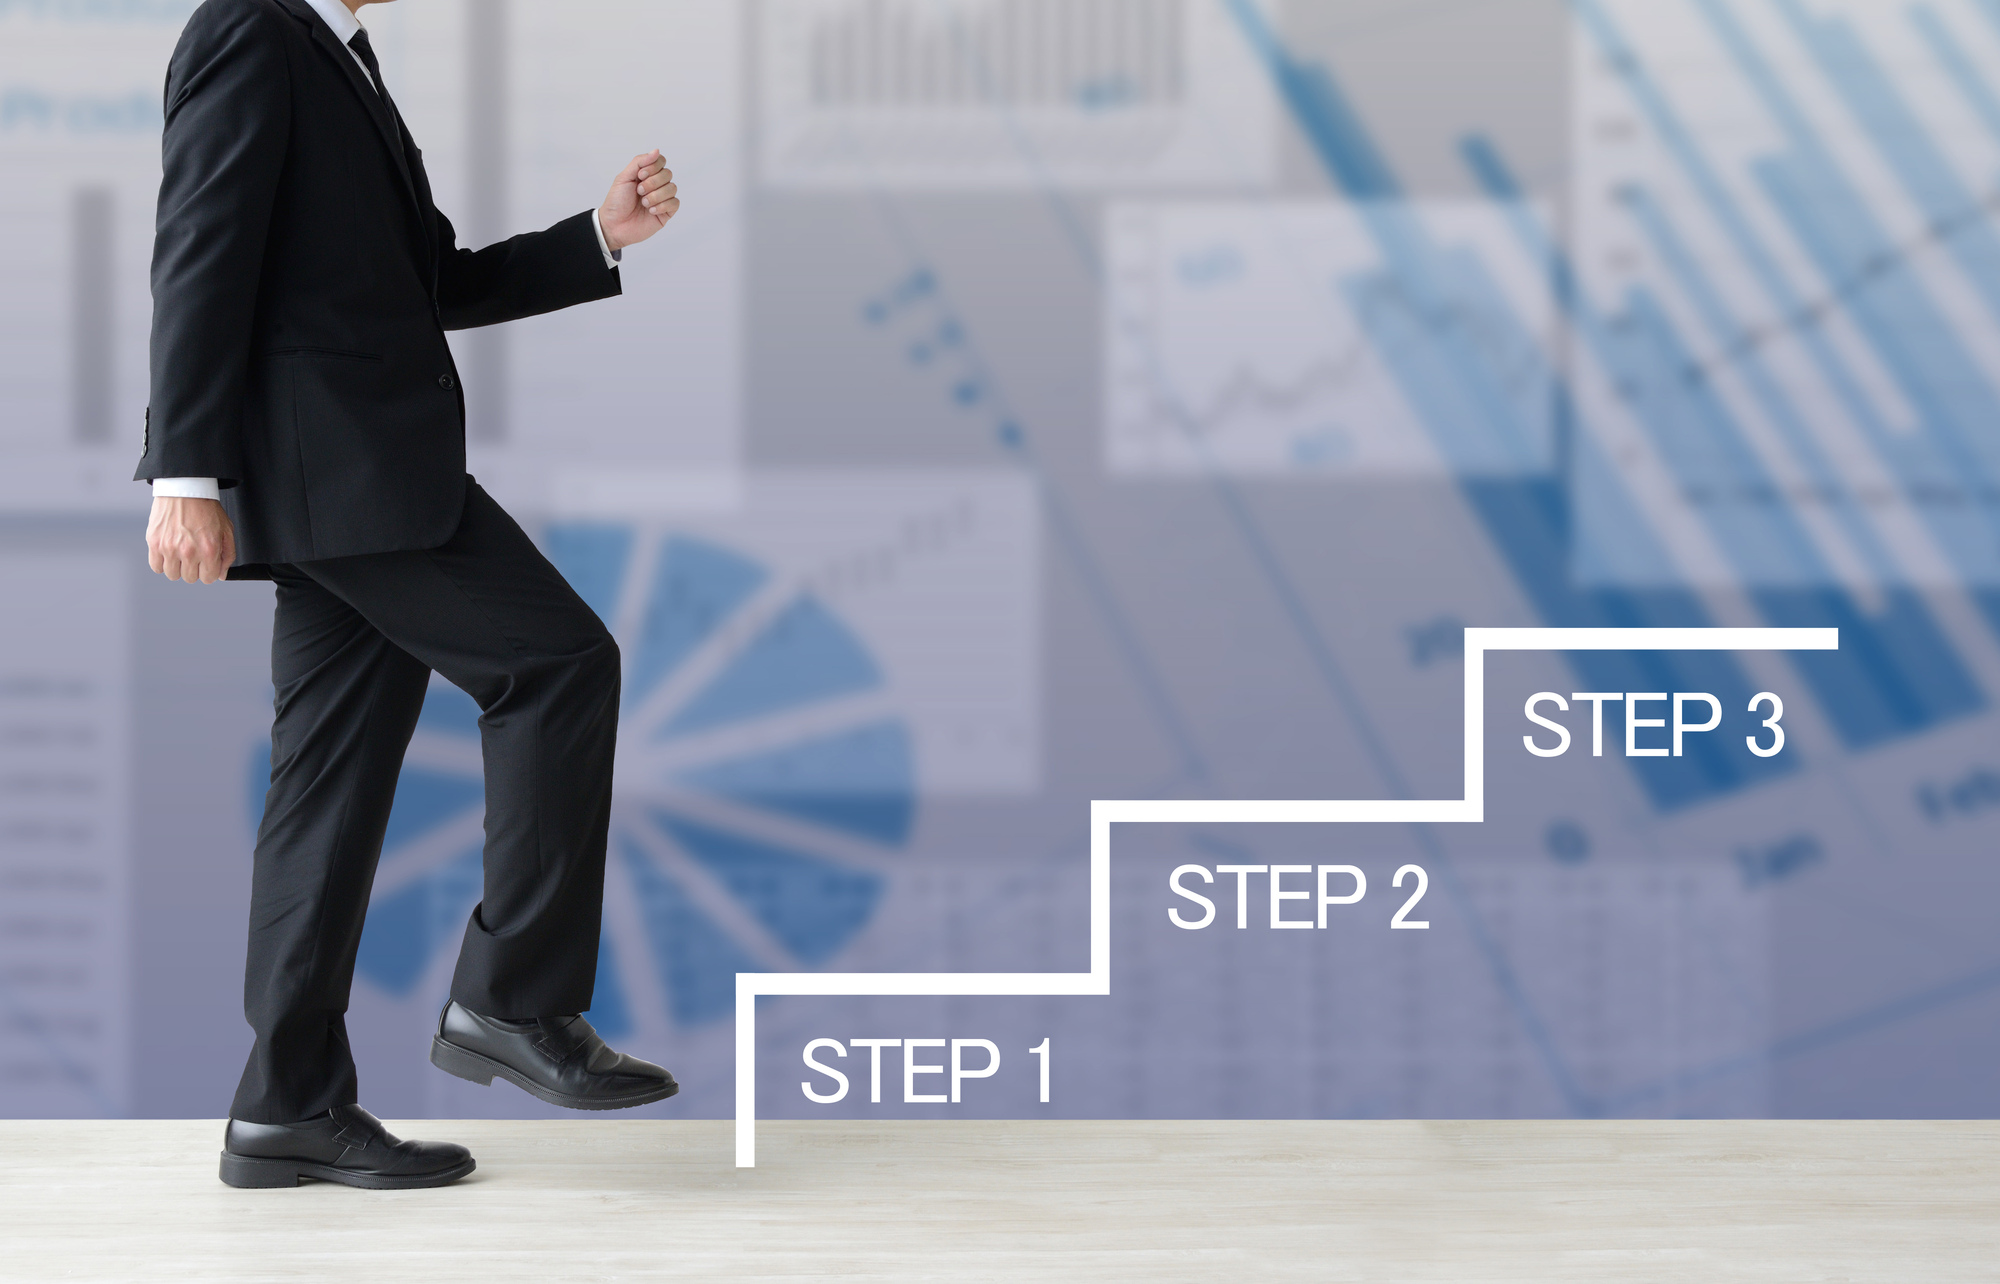 STEP1、STEP2、STEP3と書かれた階段のイラストを上ろうとするスーツ姿の男性